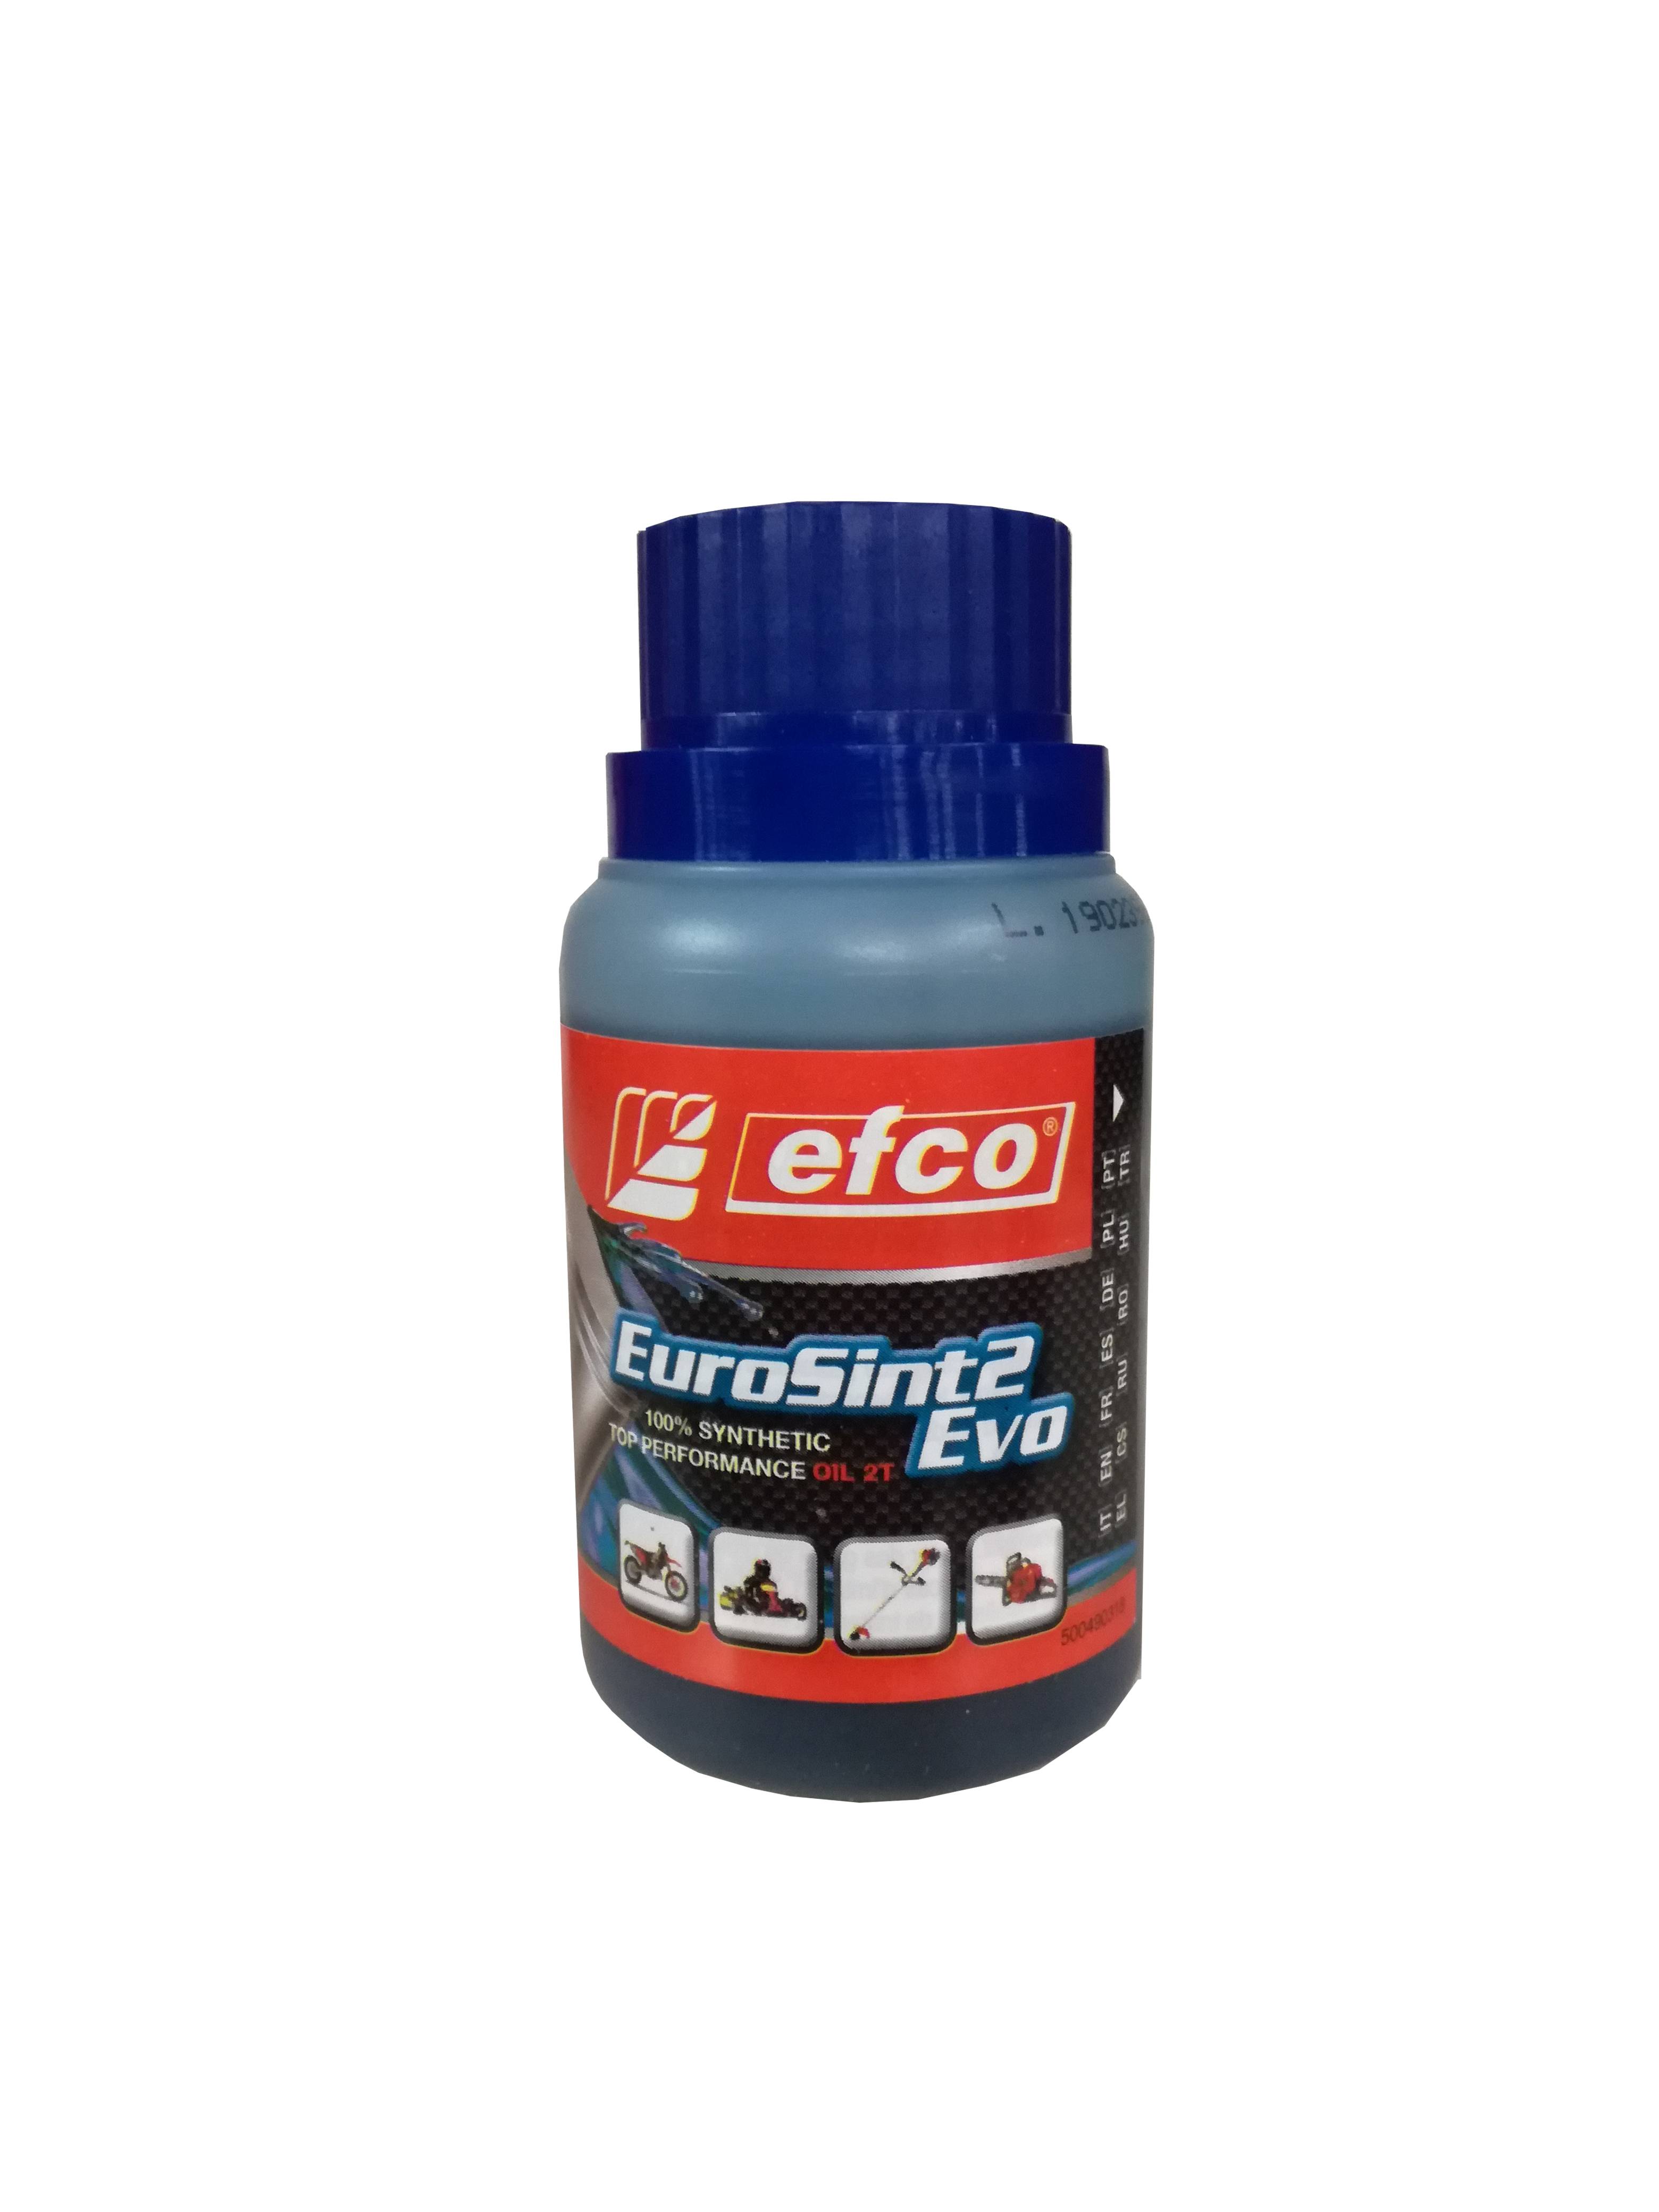 Olio eurosint 2 evo Efco - 100 ml